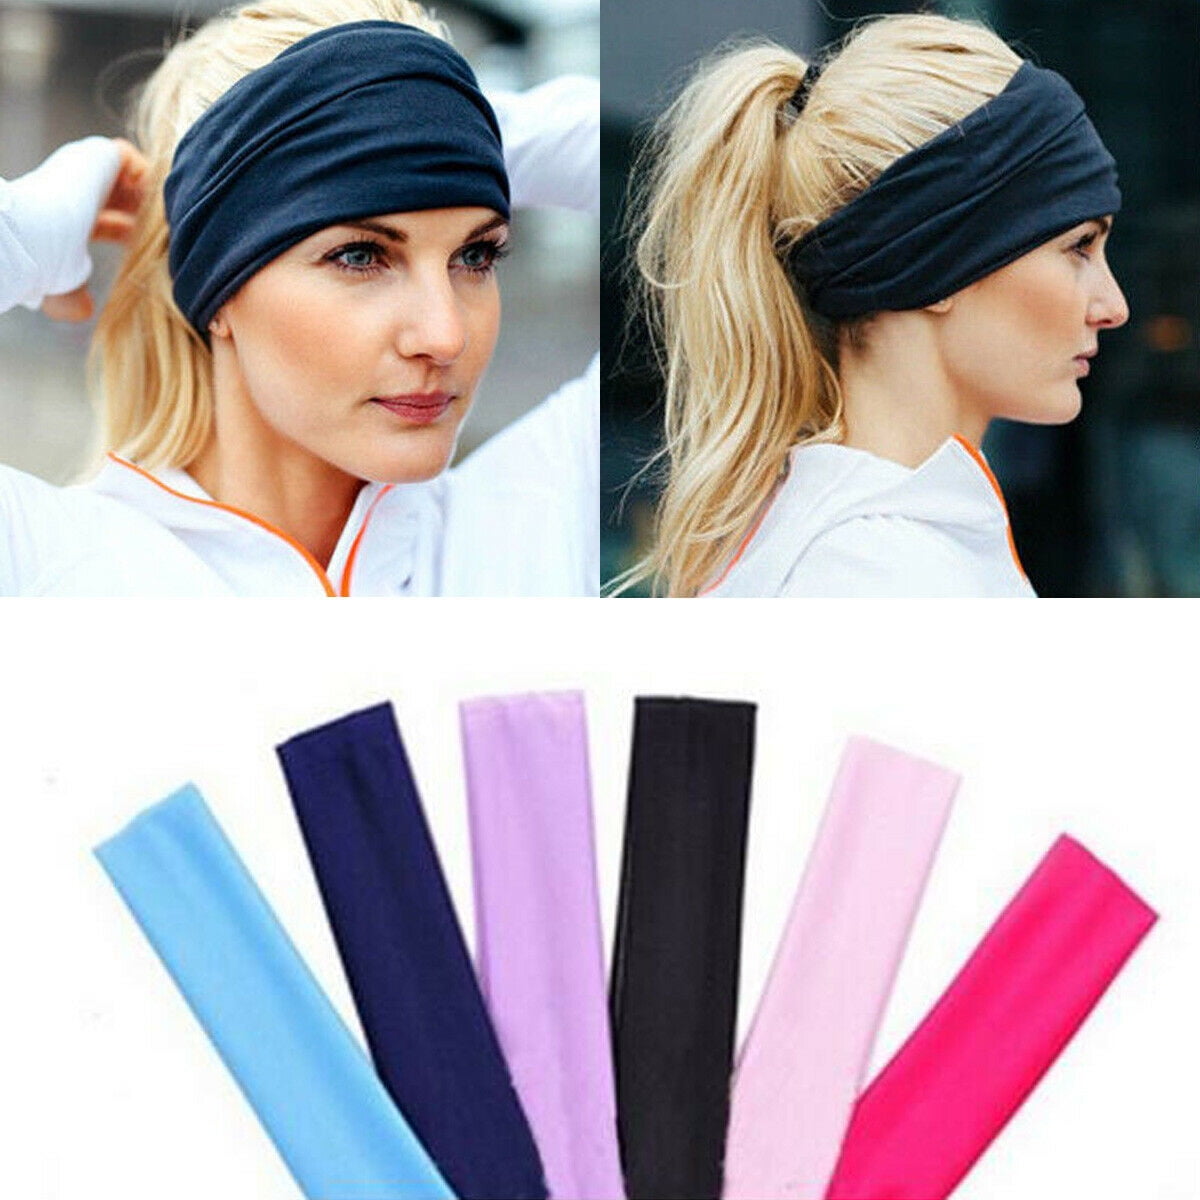 1-Pack Unisex HEADBAND Stretch Sports Yoga Gym Hair Band Wrap Sweatband Solid